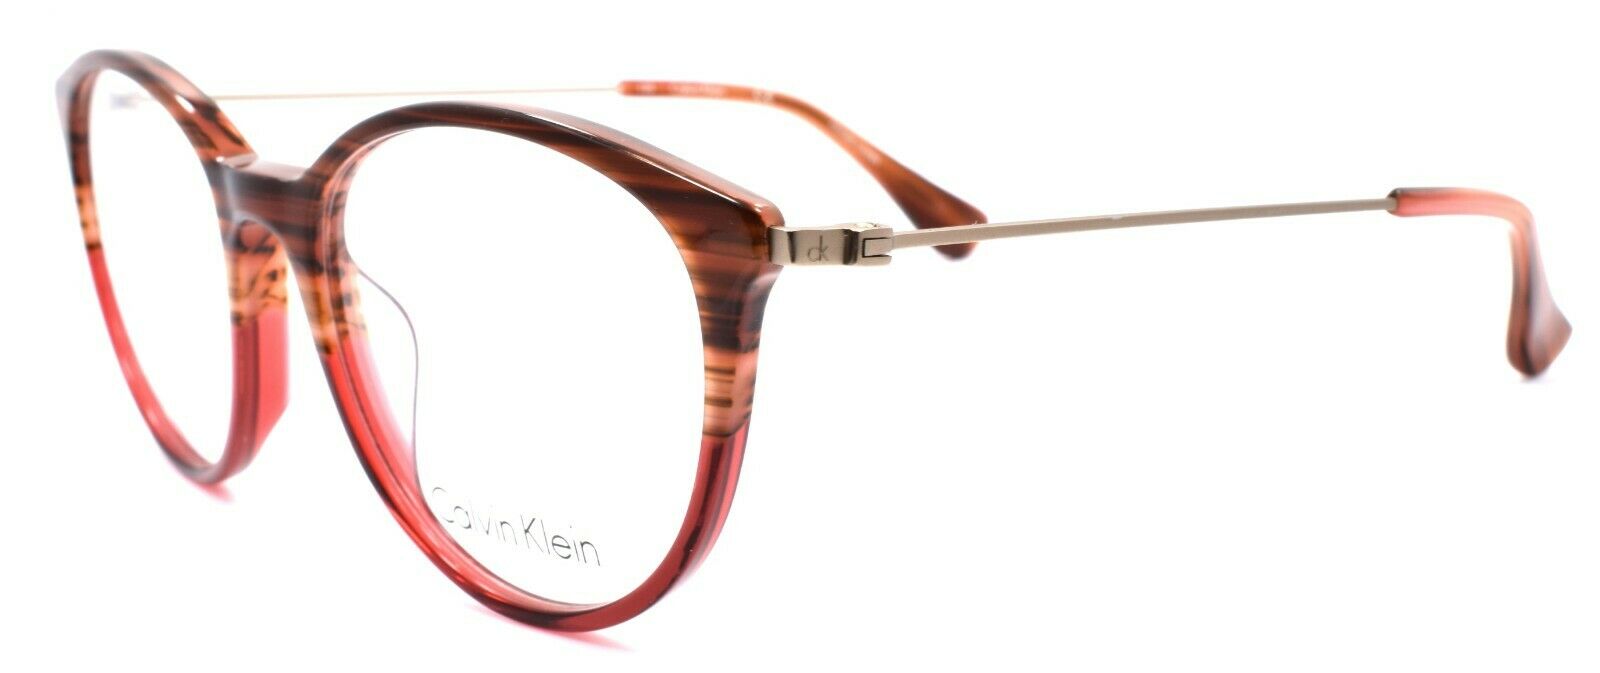 1-Calvin Klein CK5928 203 Women's Eyeglasses Frames 50-17-135 Striped Brown Rose-750779095690-IKSpecs